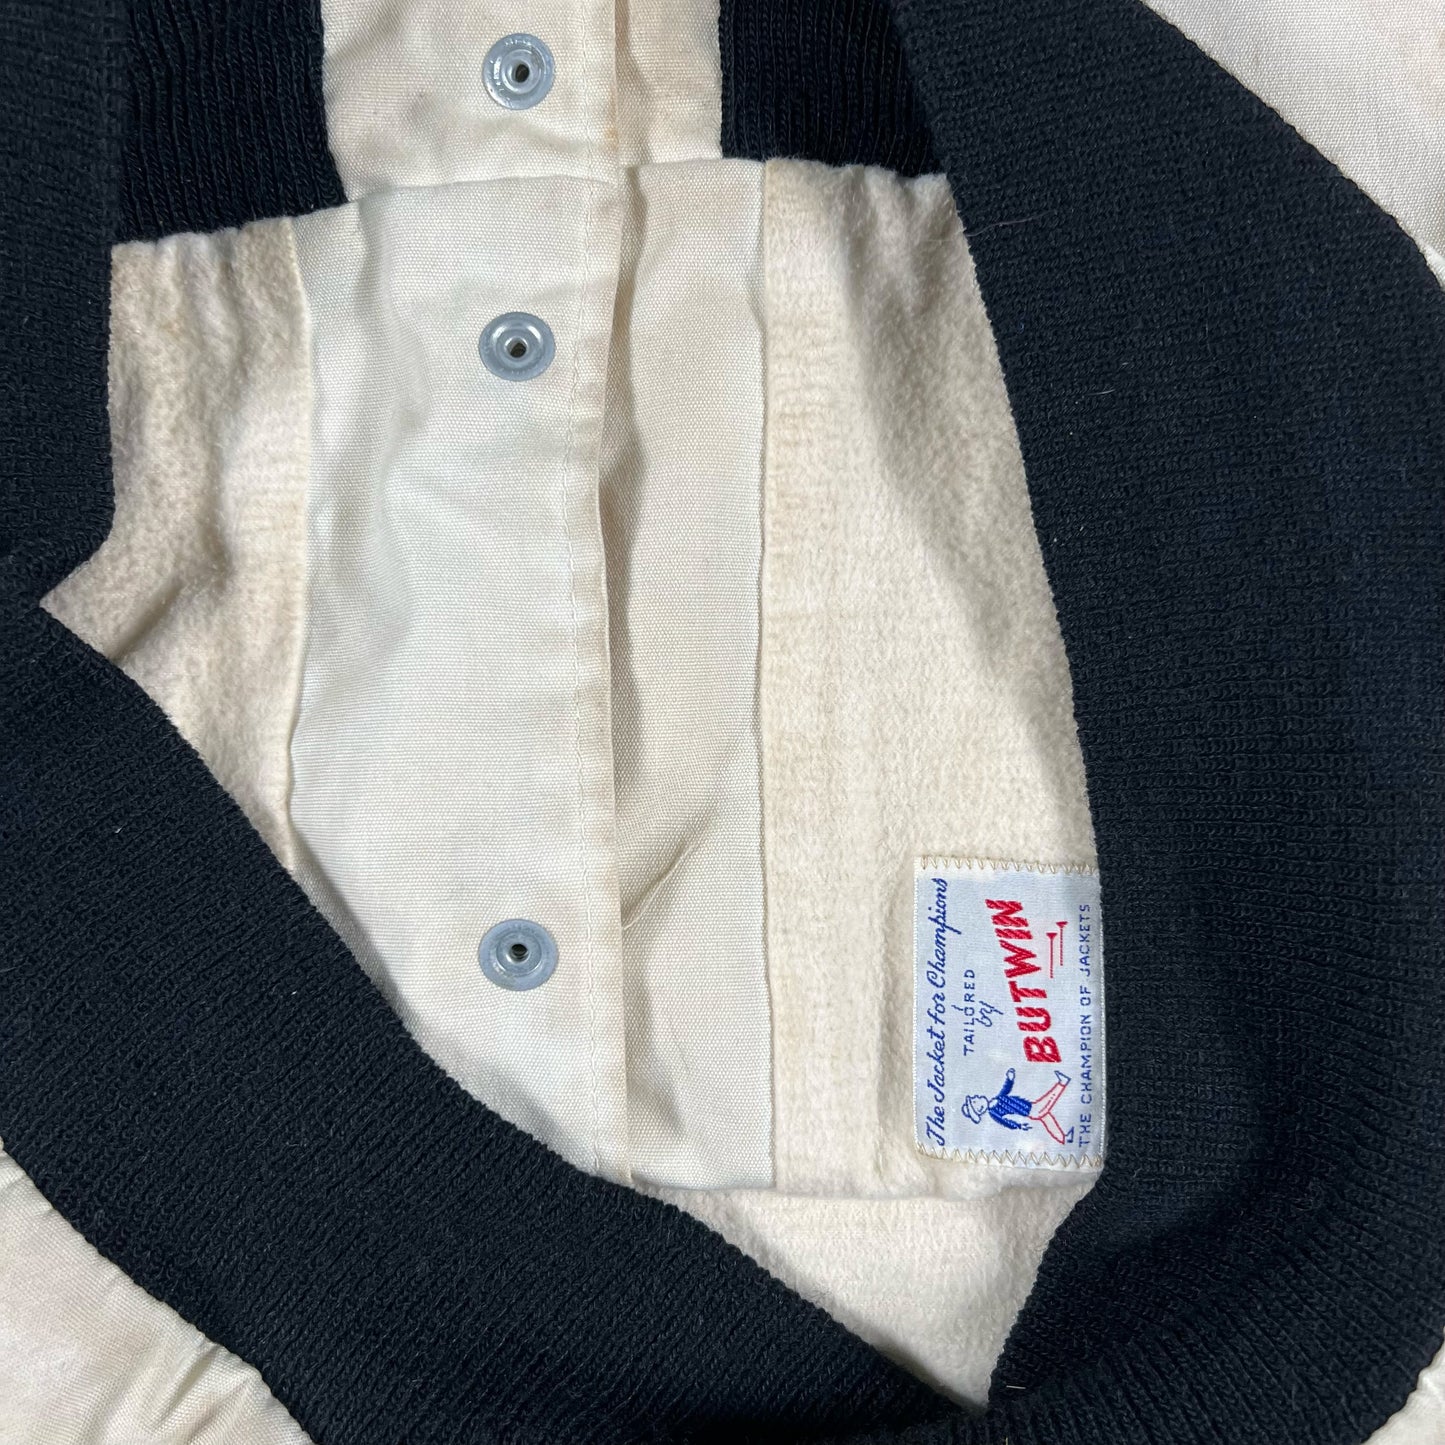 50s Cotton Chain Stitch Varsity Jacket- XL